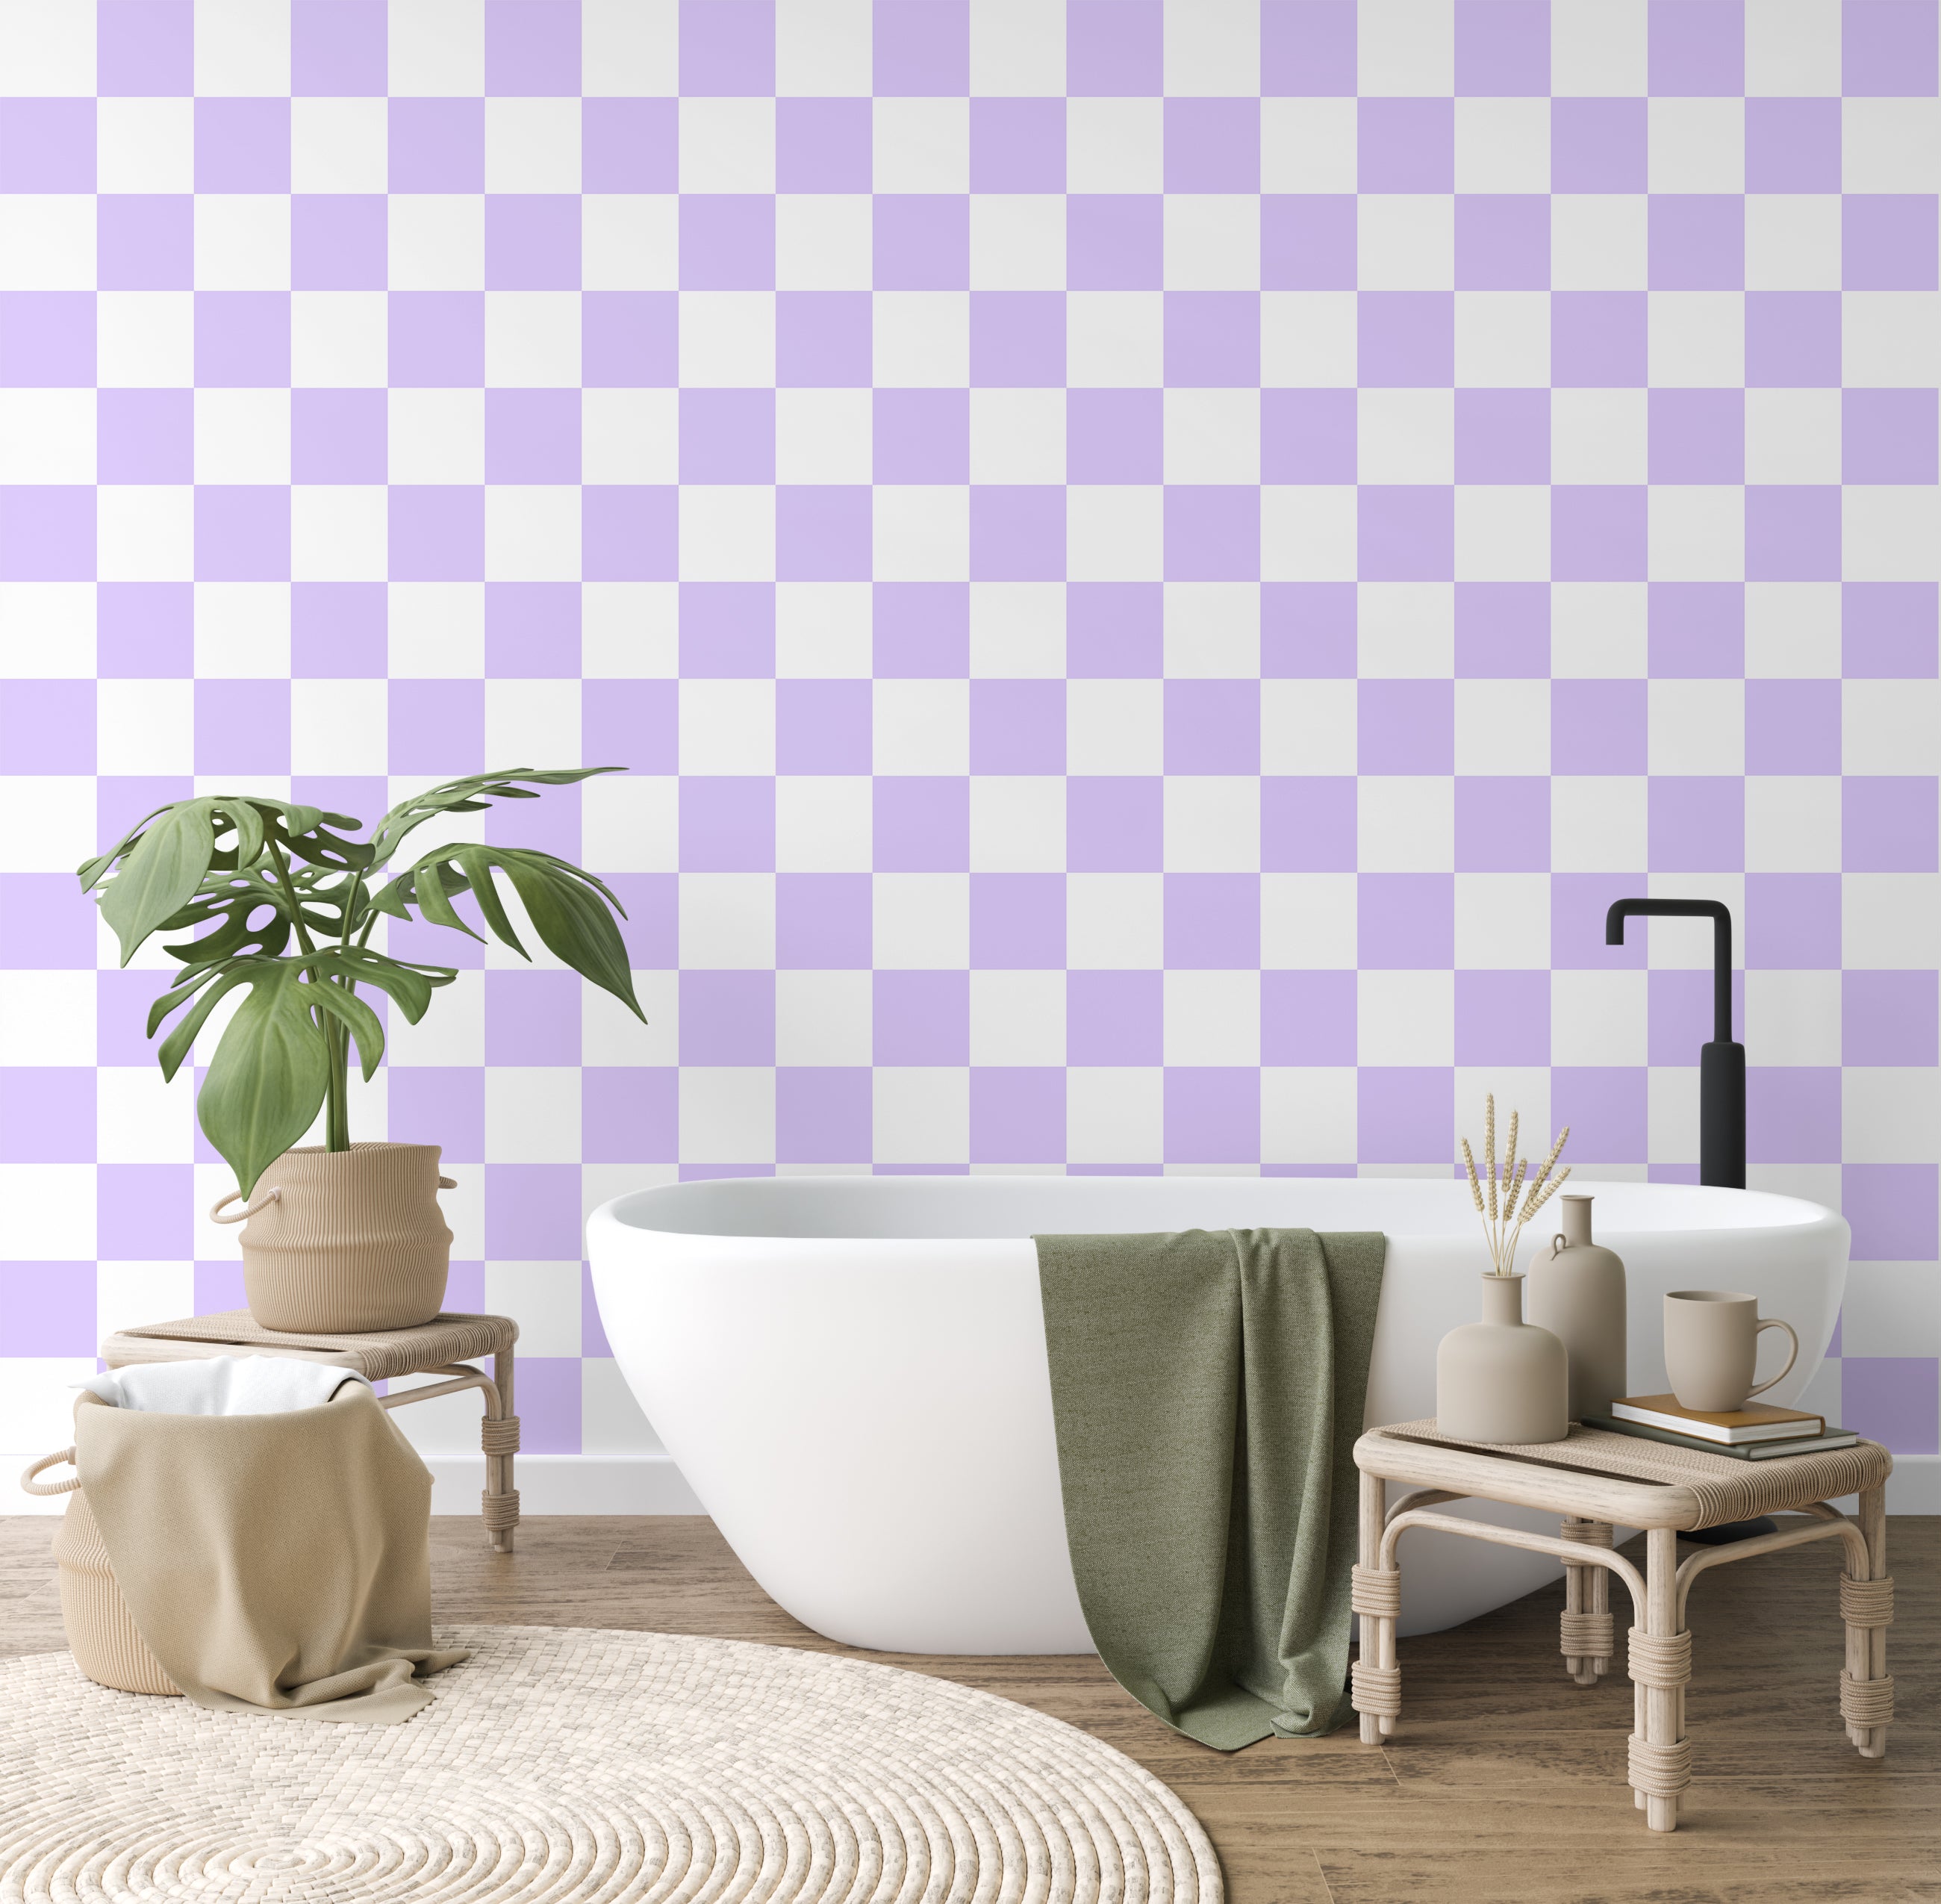 Checkmate' Checkerboard Wallpaper in Lavender, Bubblegum Yum and